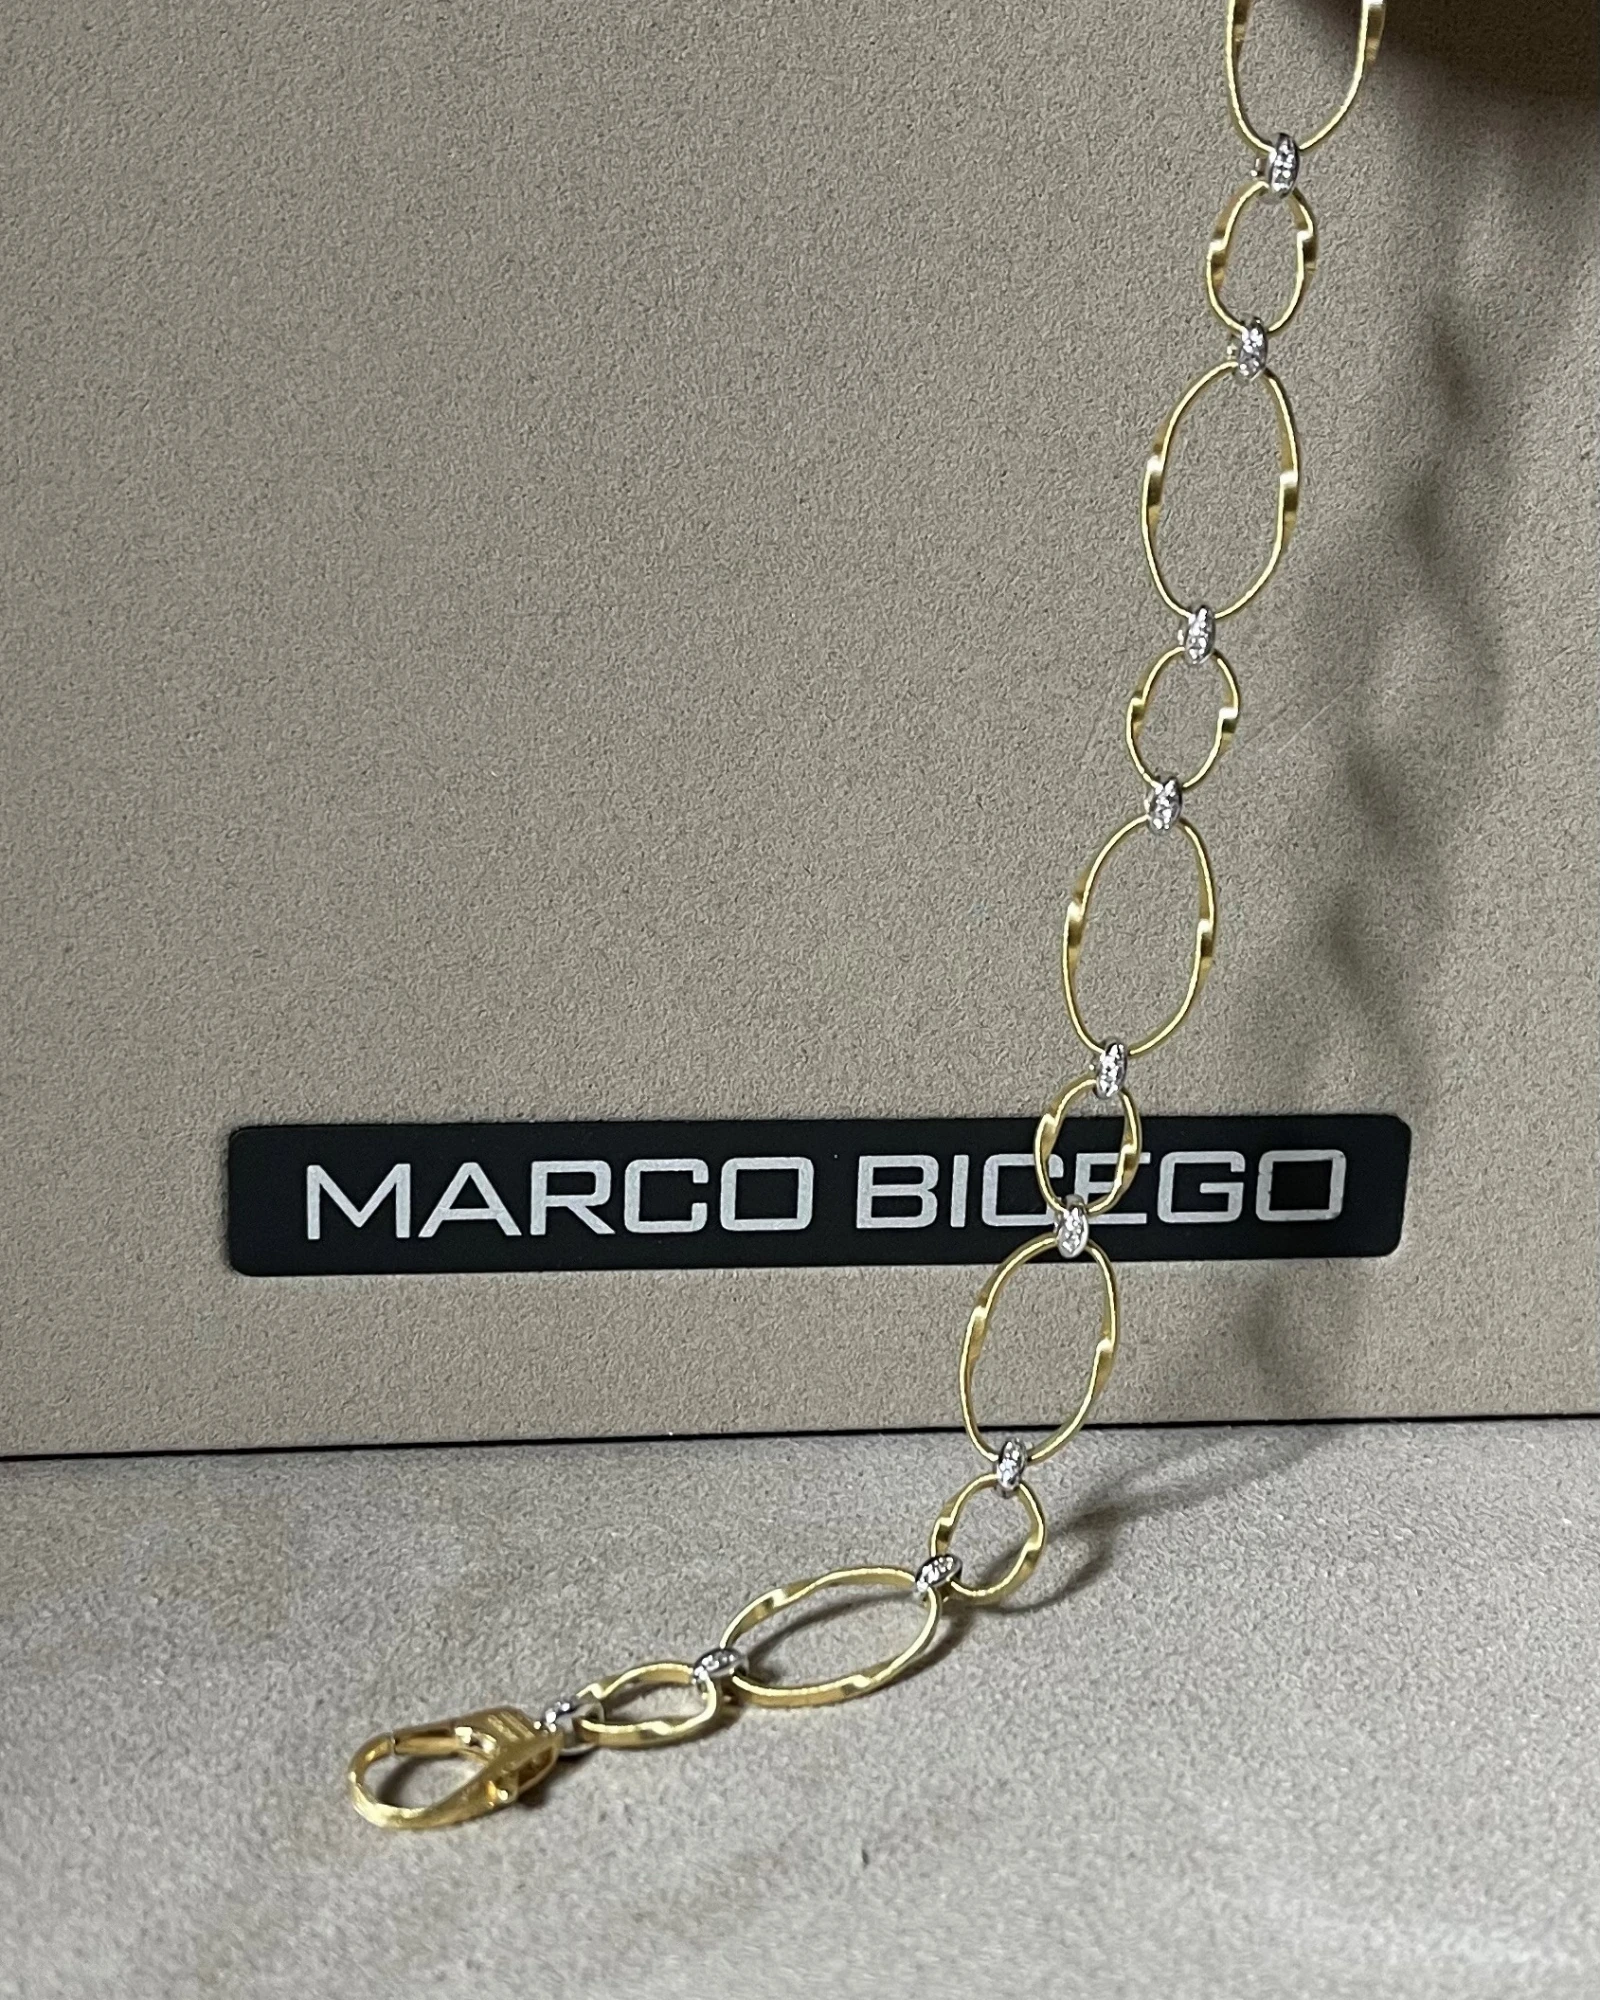 (012)Marco Bicego bracciale oro e brillanti cod: BG783-B2 (YW-M5-19,0)